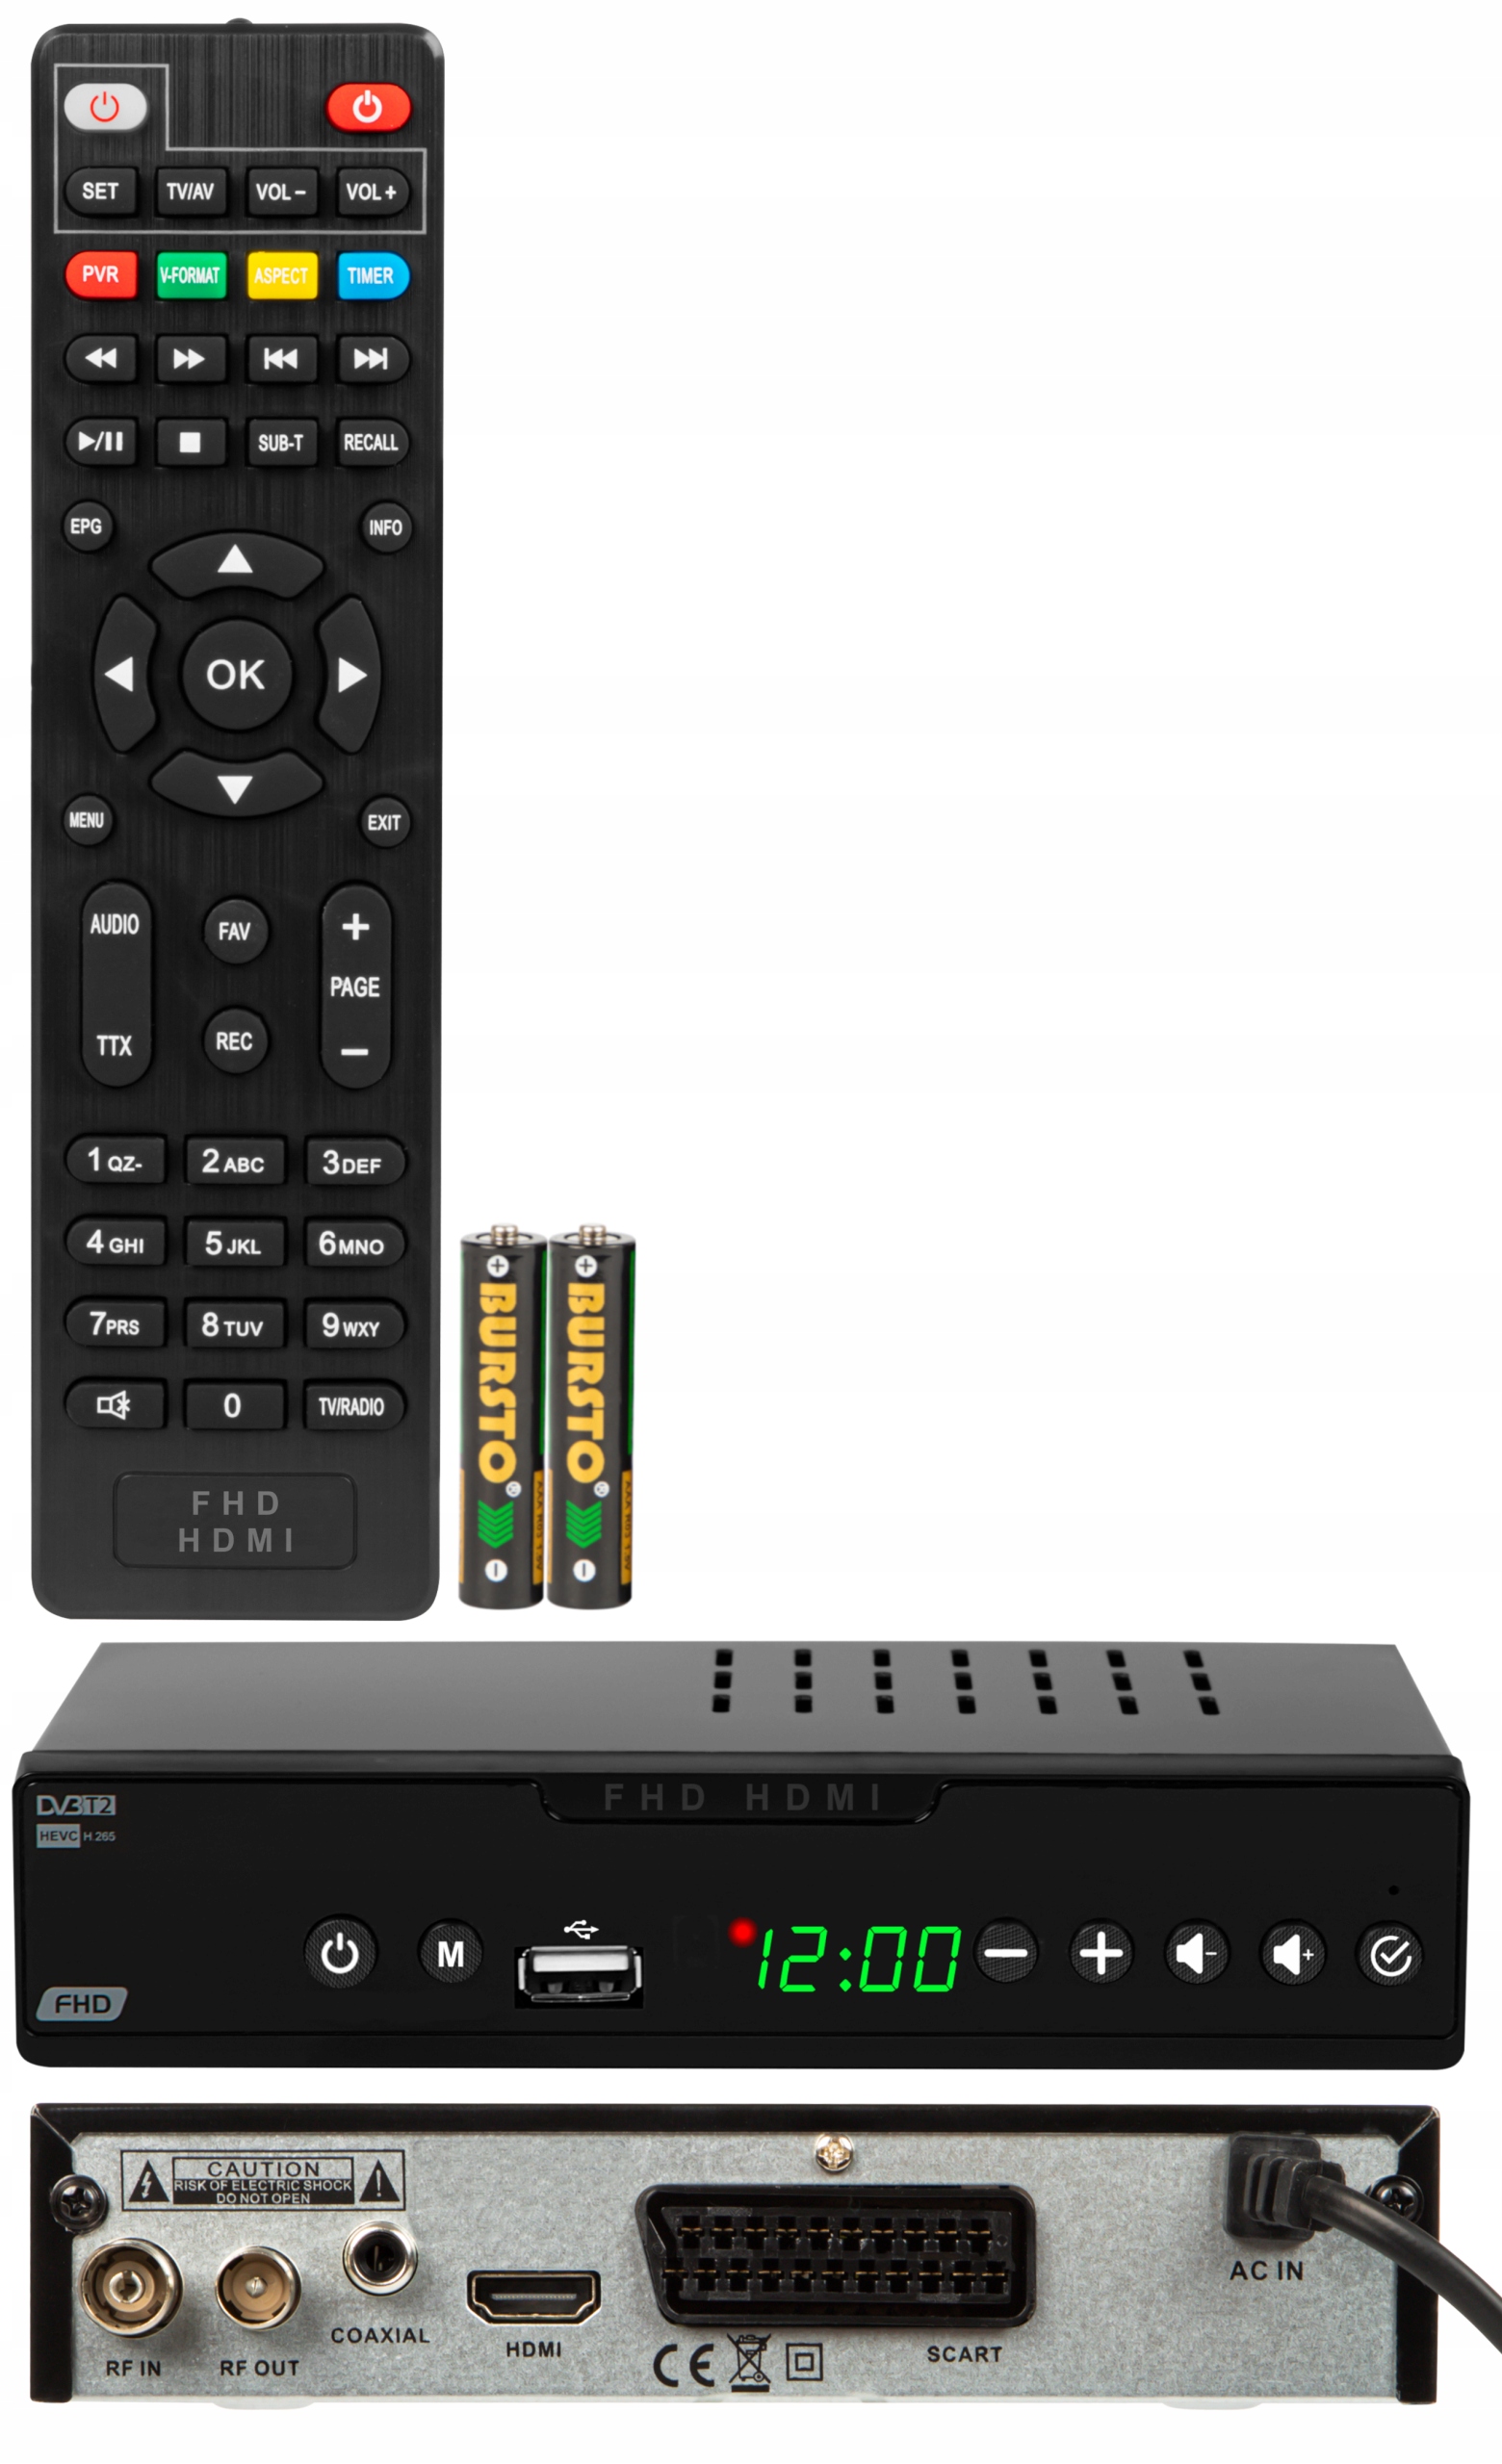 TERRESTRIAL TV DECODER DVB-T2 HEVC H.265 VIRITIN HDMI SCART USB FULL HD KAUKO-OHJAIN Viritintyyppi DVB-T2